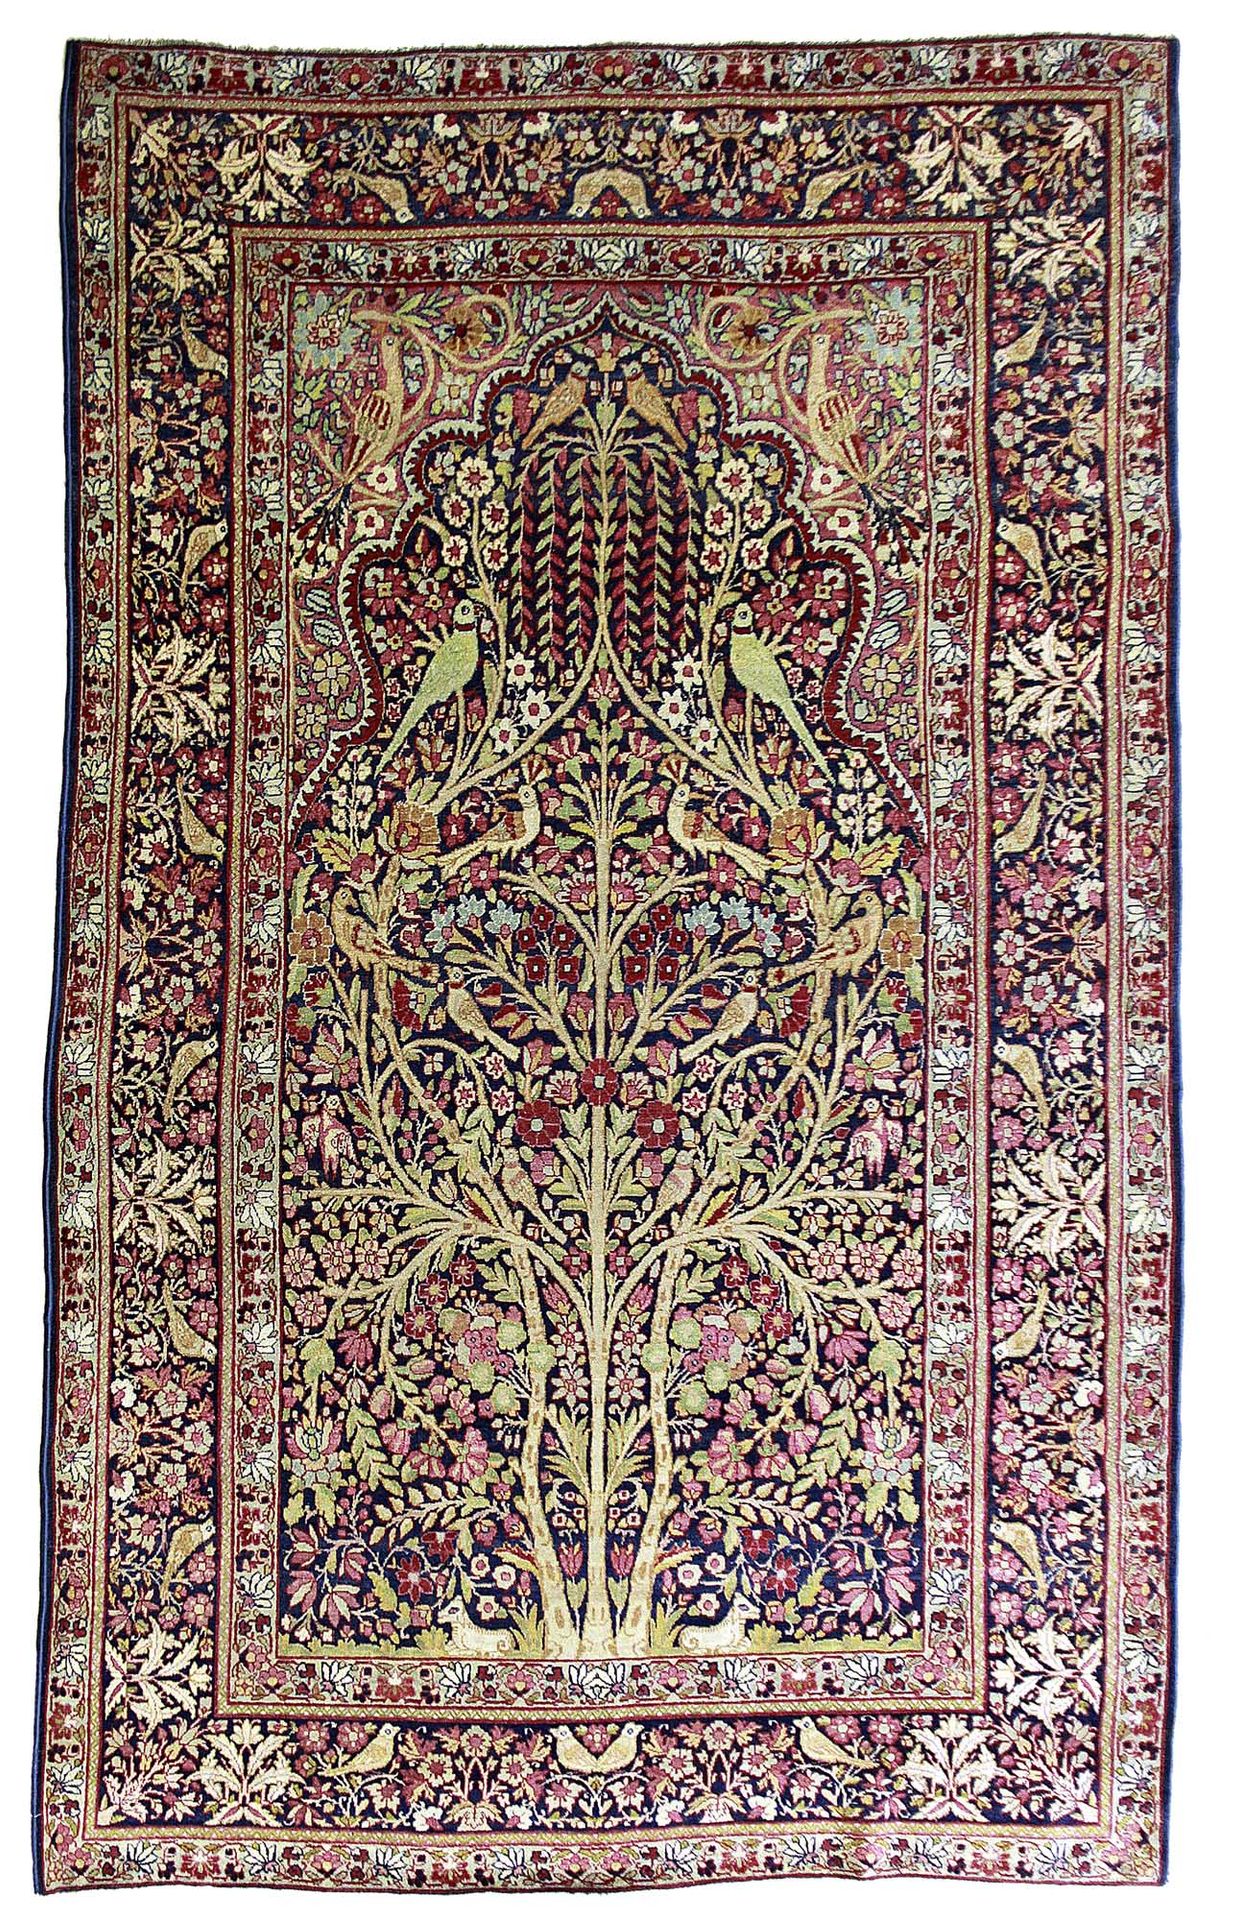 Null Teppich KIRMAN-LAVER (Persien), Ende des 19. Jahrhunderts.

Maße: 224 x 128&hellip;